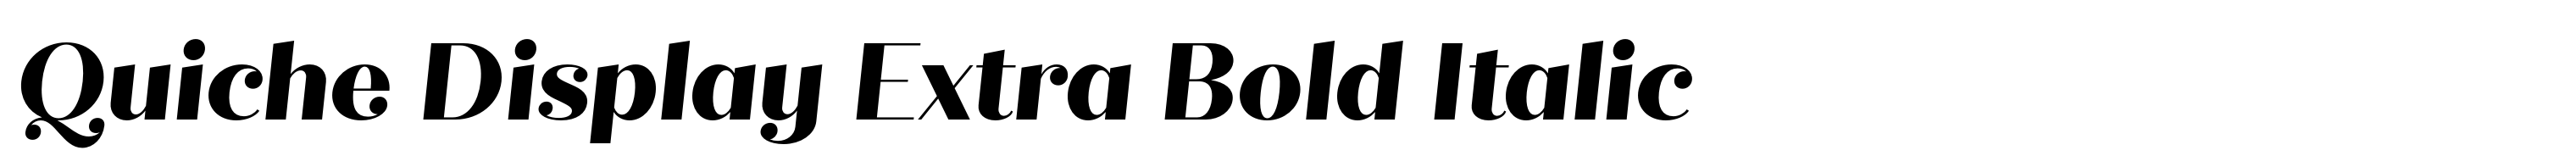 Quiche Display Extra Bold Italic